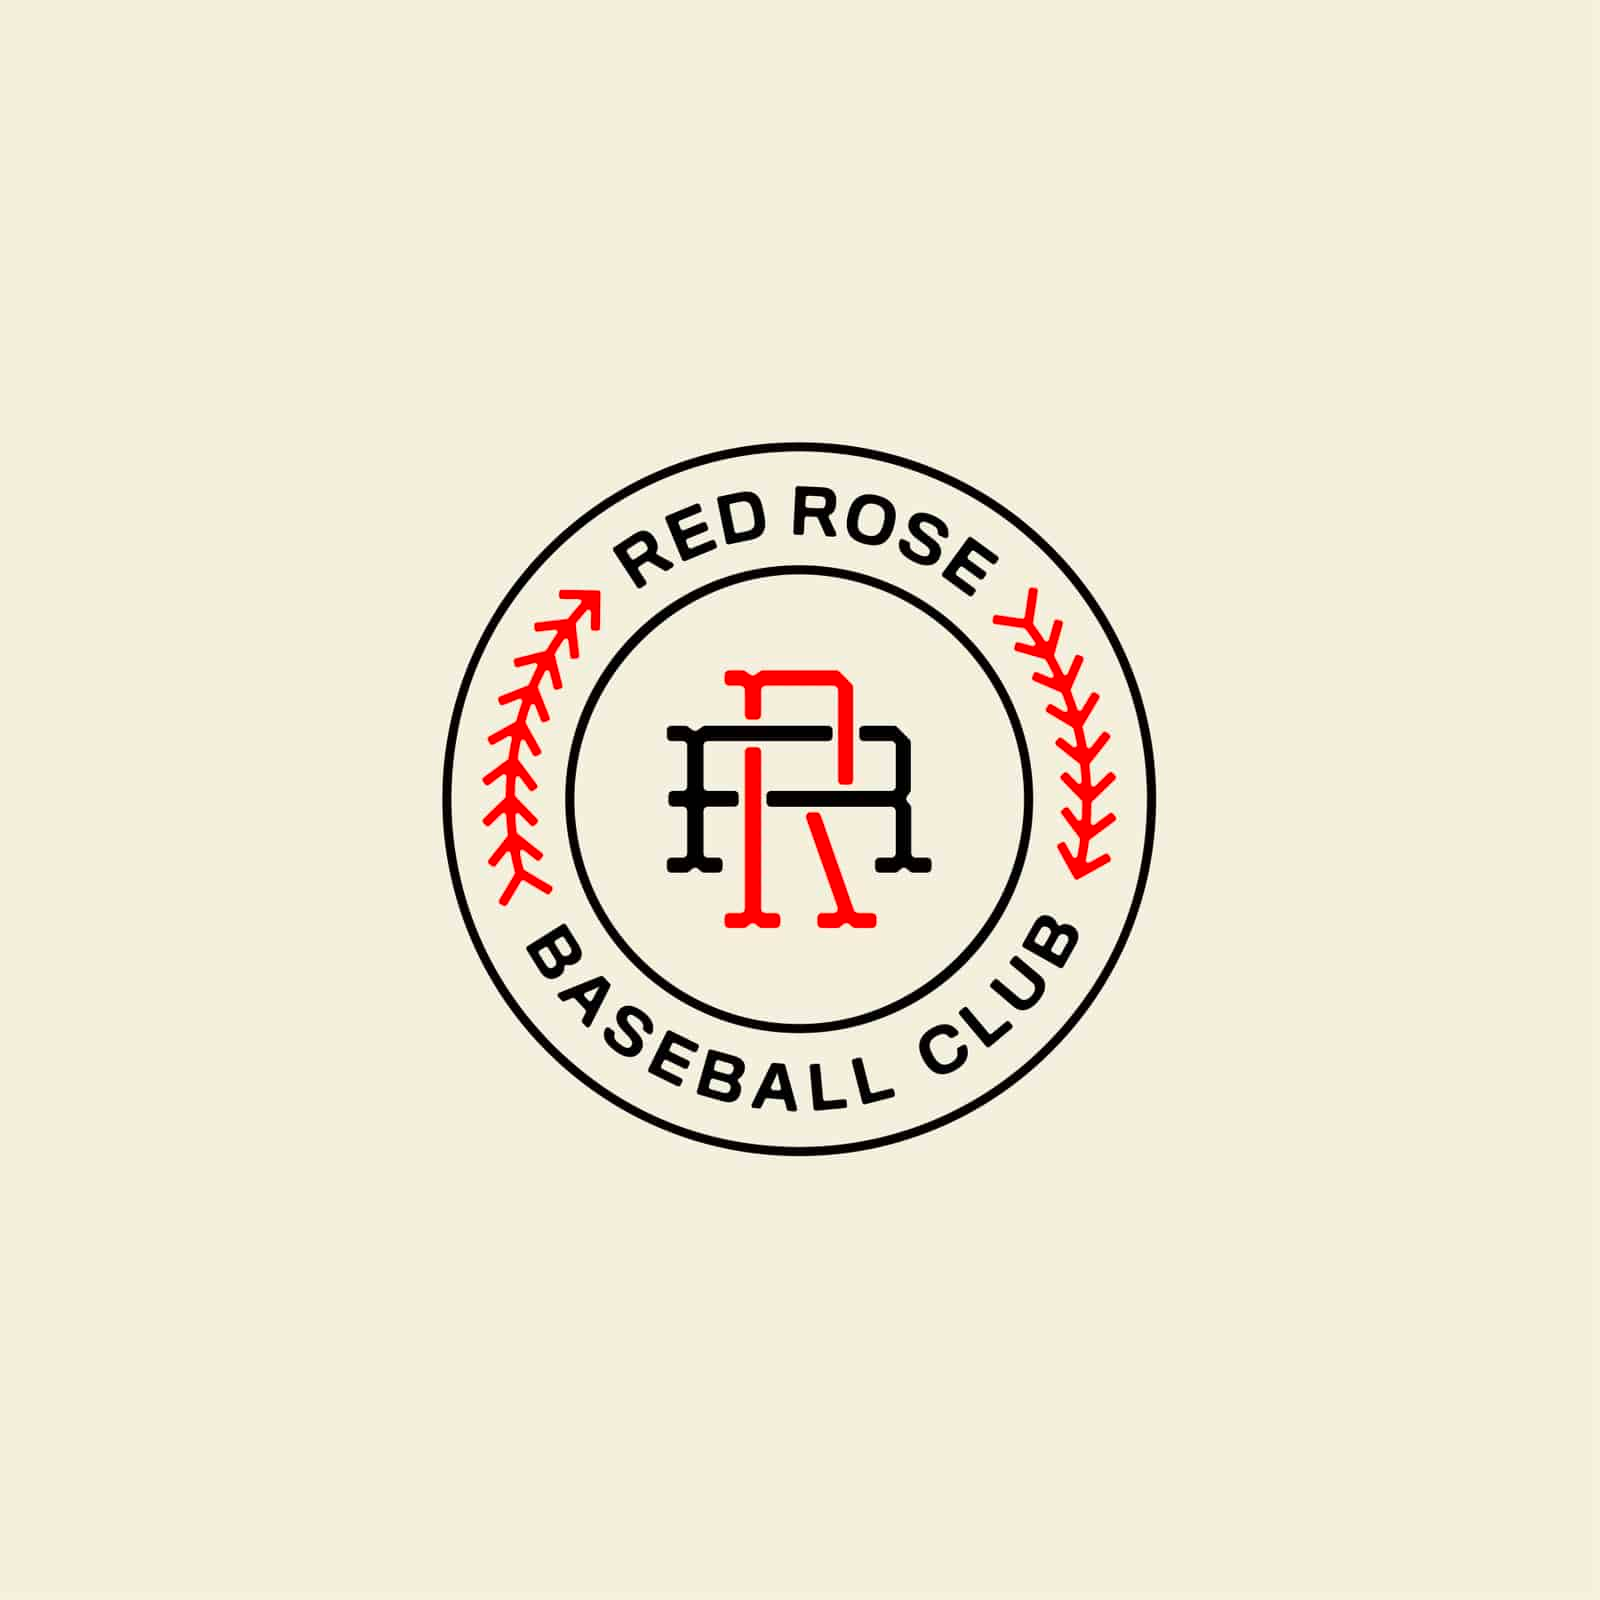 Red Rose Baseball Club logo